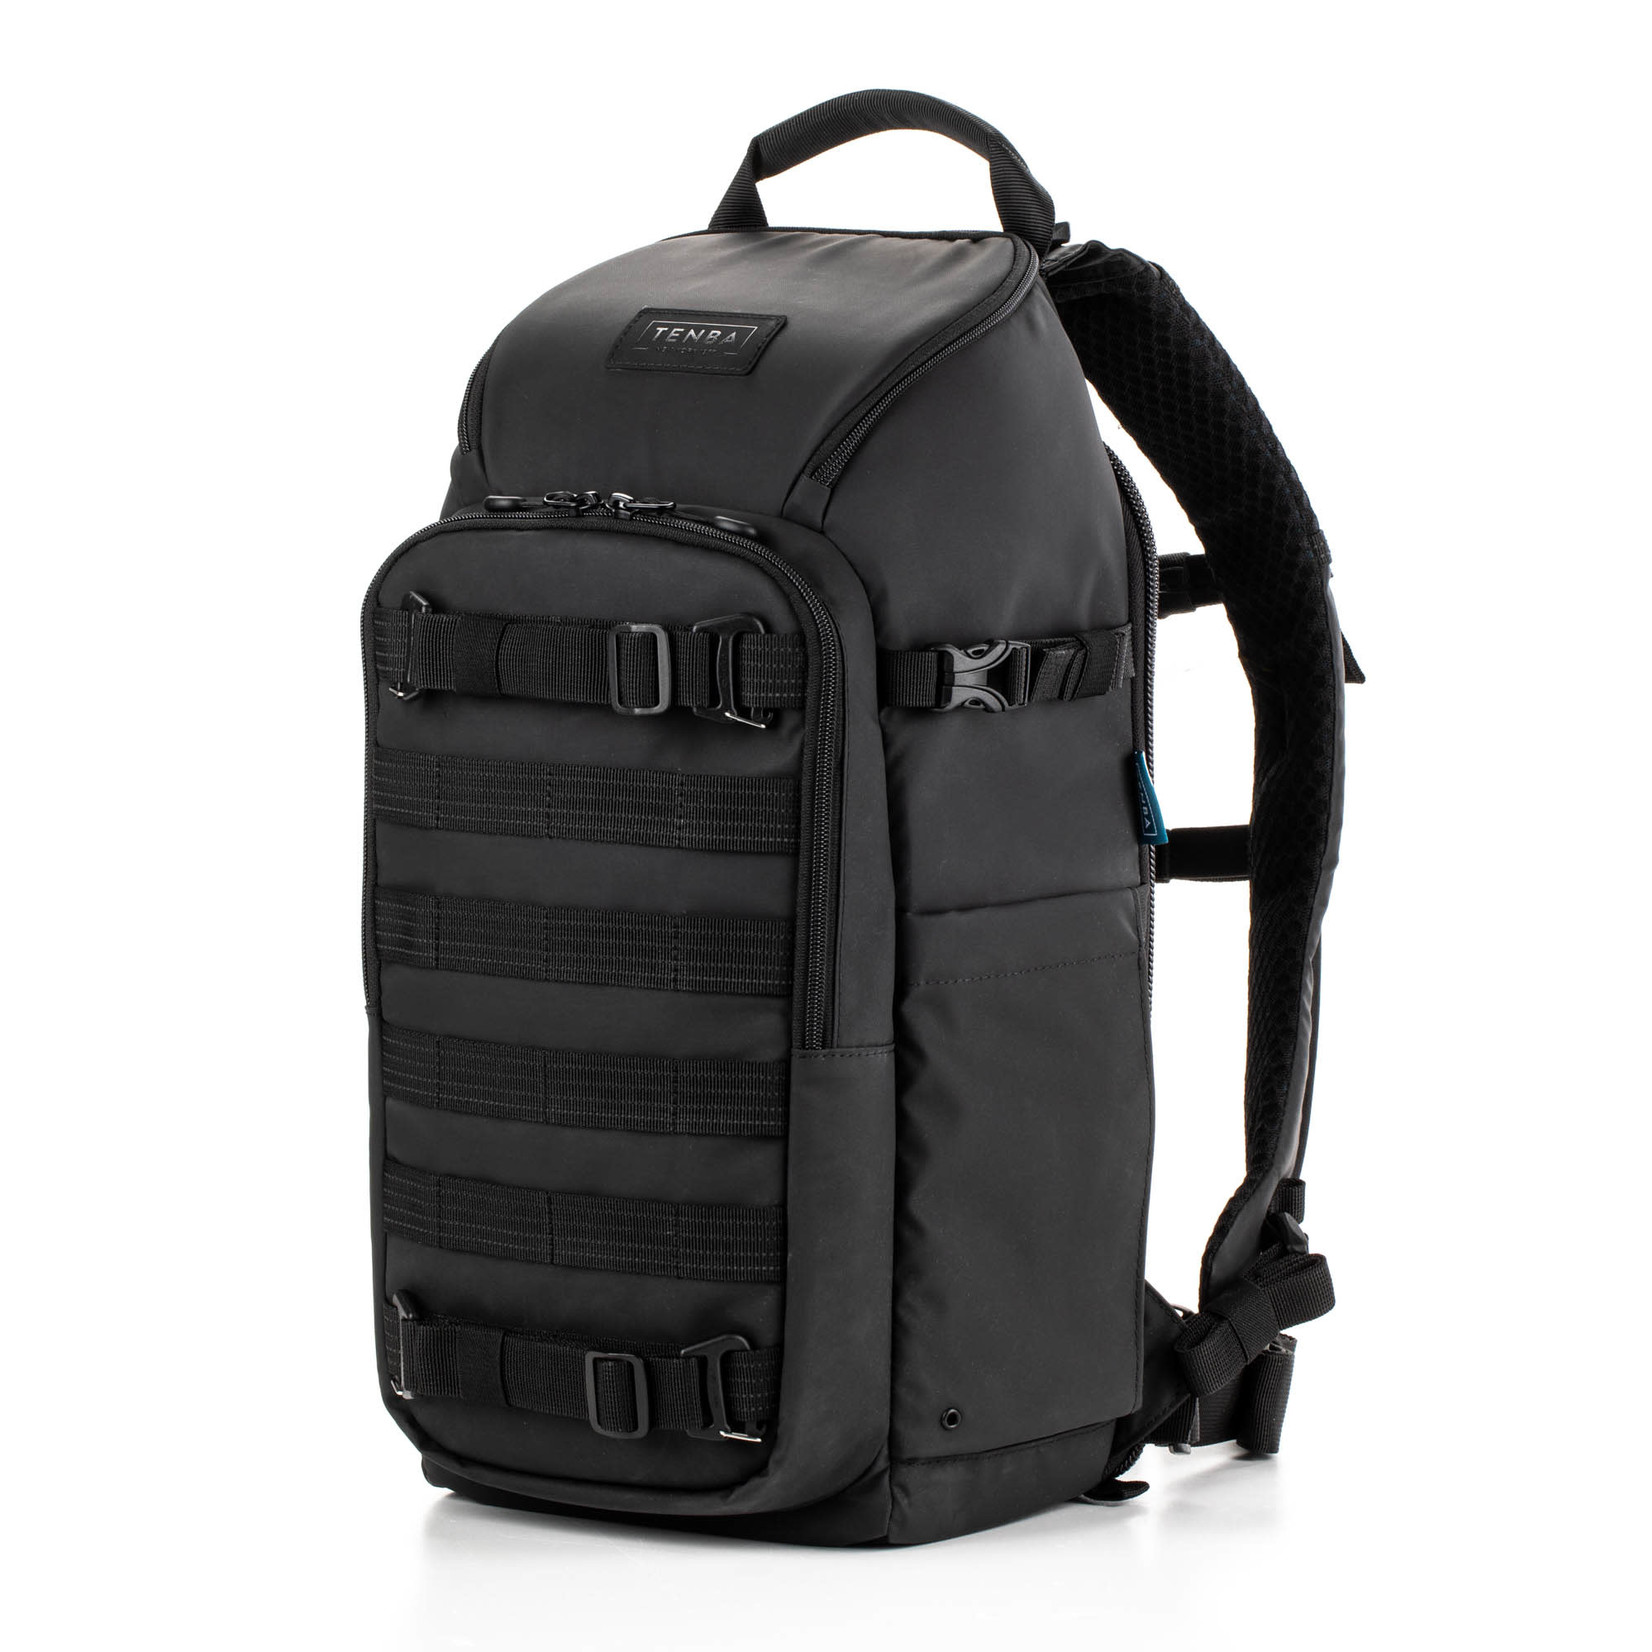 Tenba Axis v2 16L Backpack – Black - Stewarts Photo